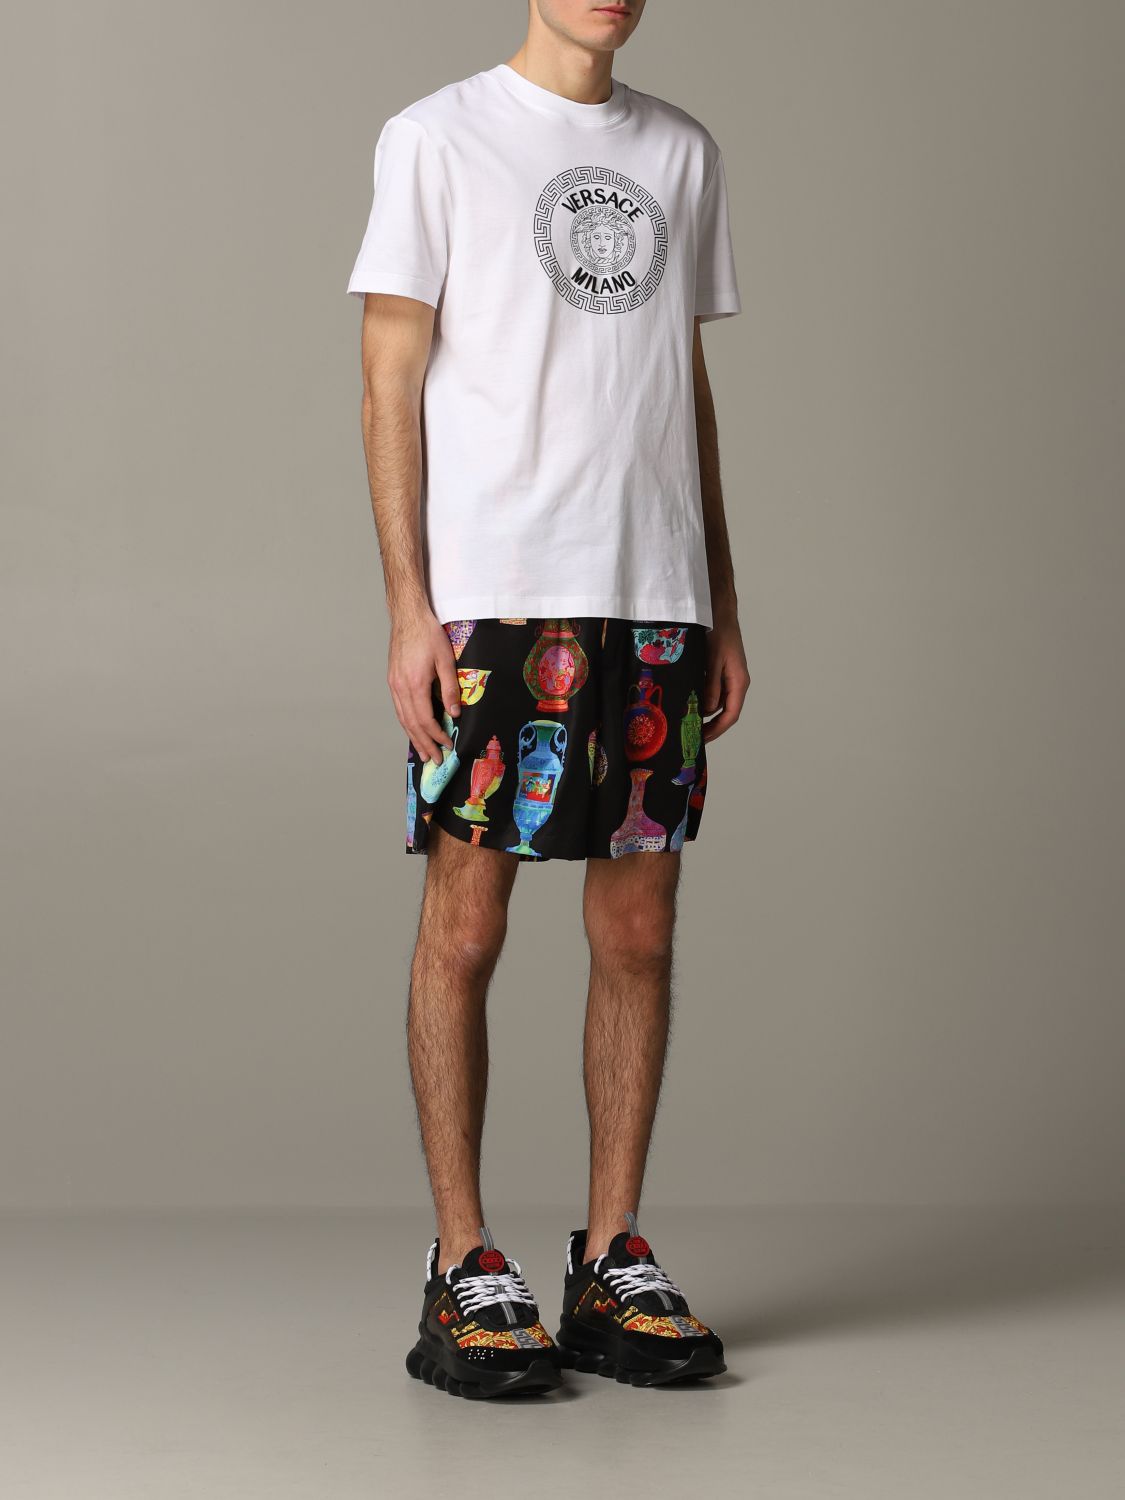 versace shorts and t shirt